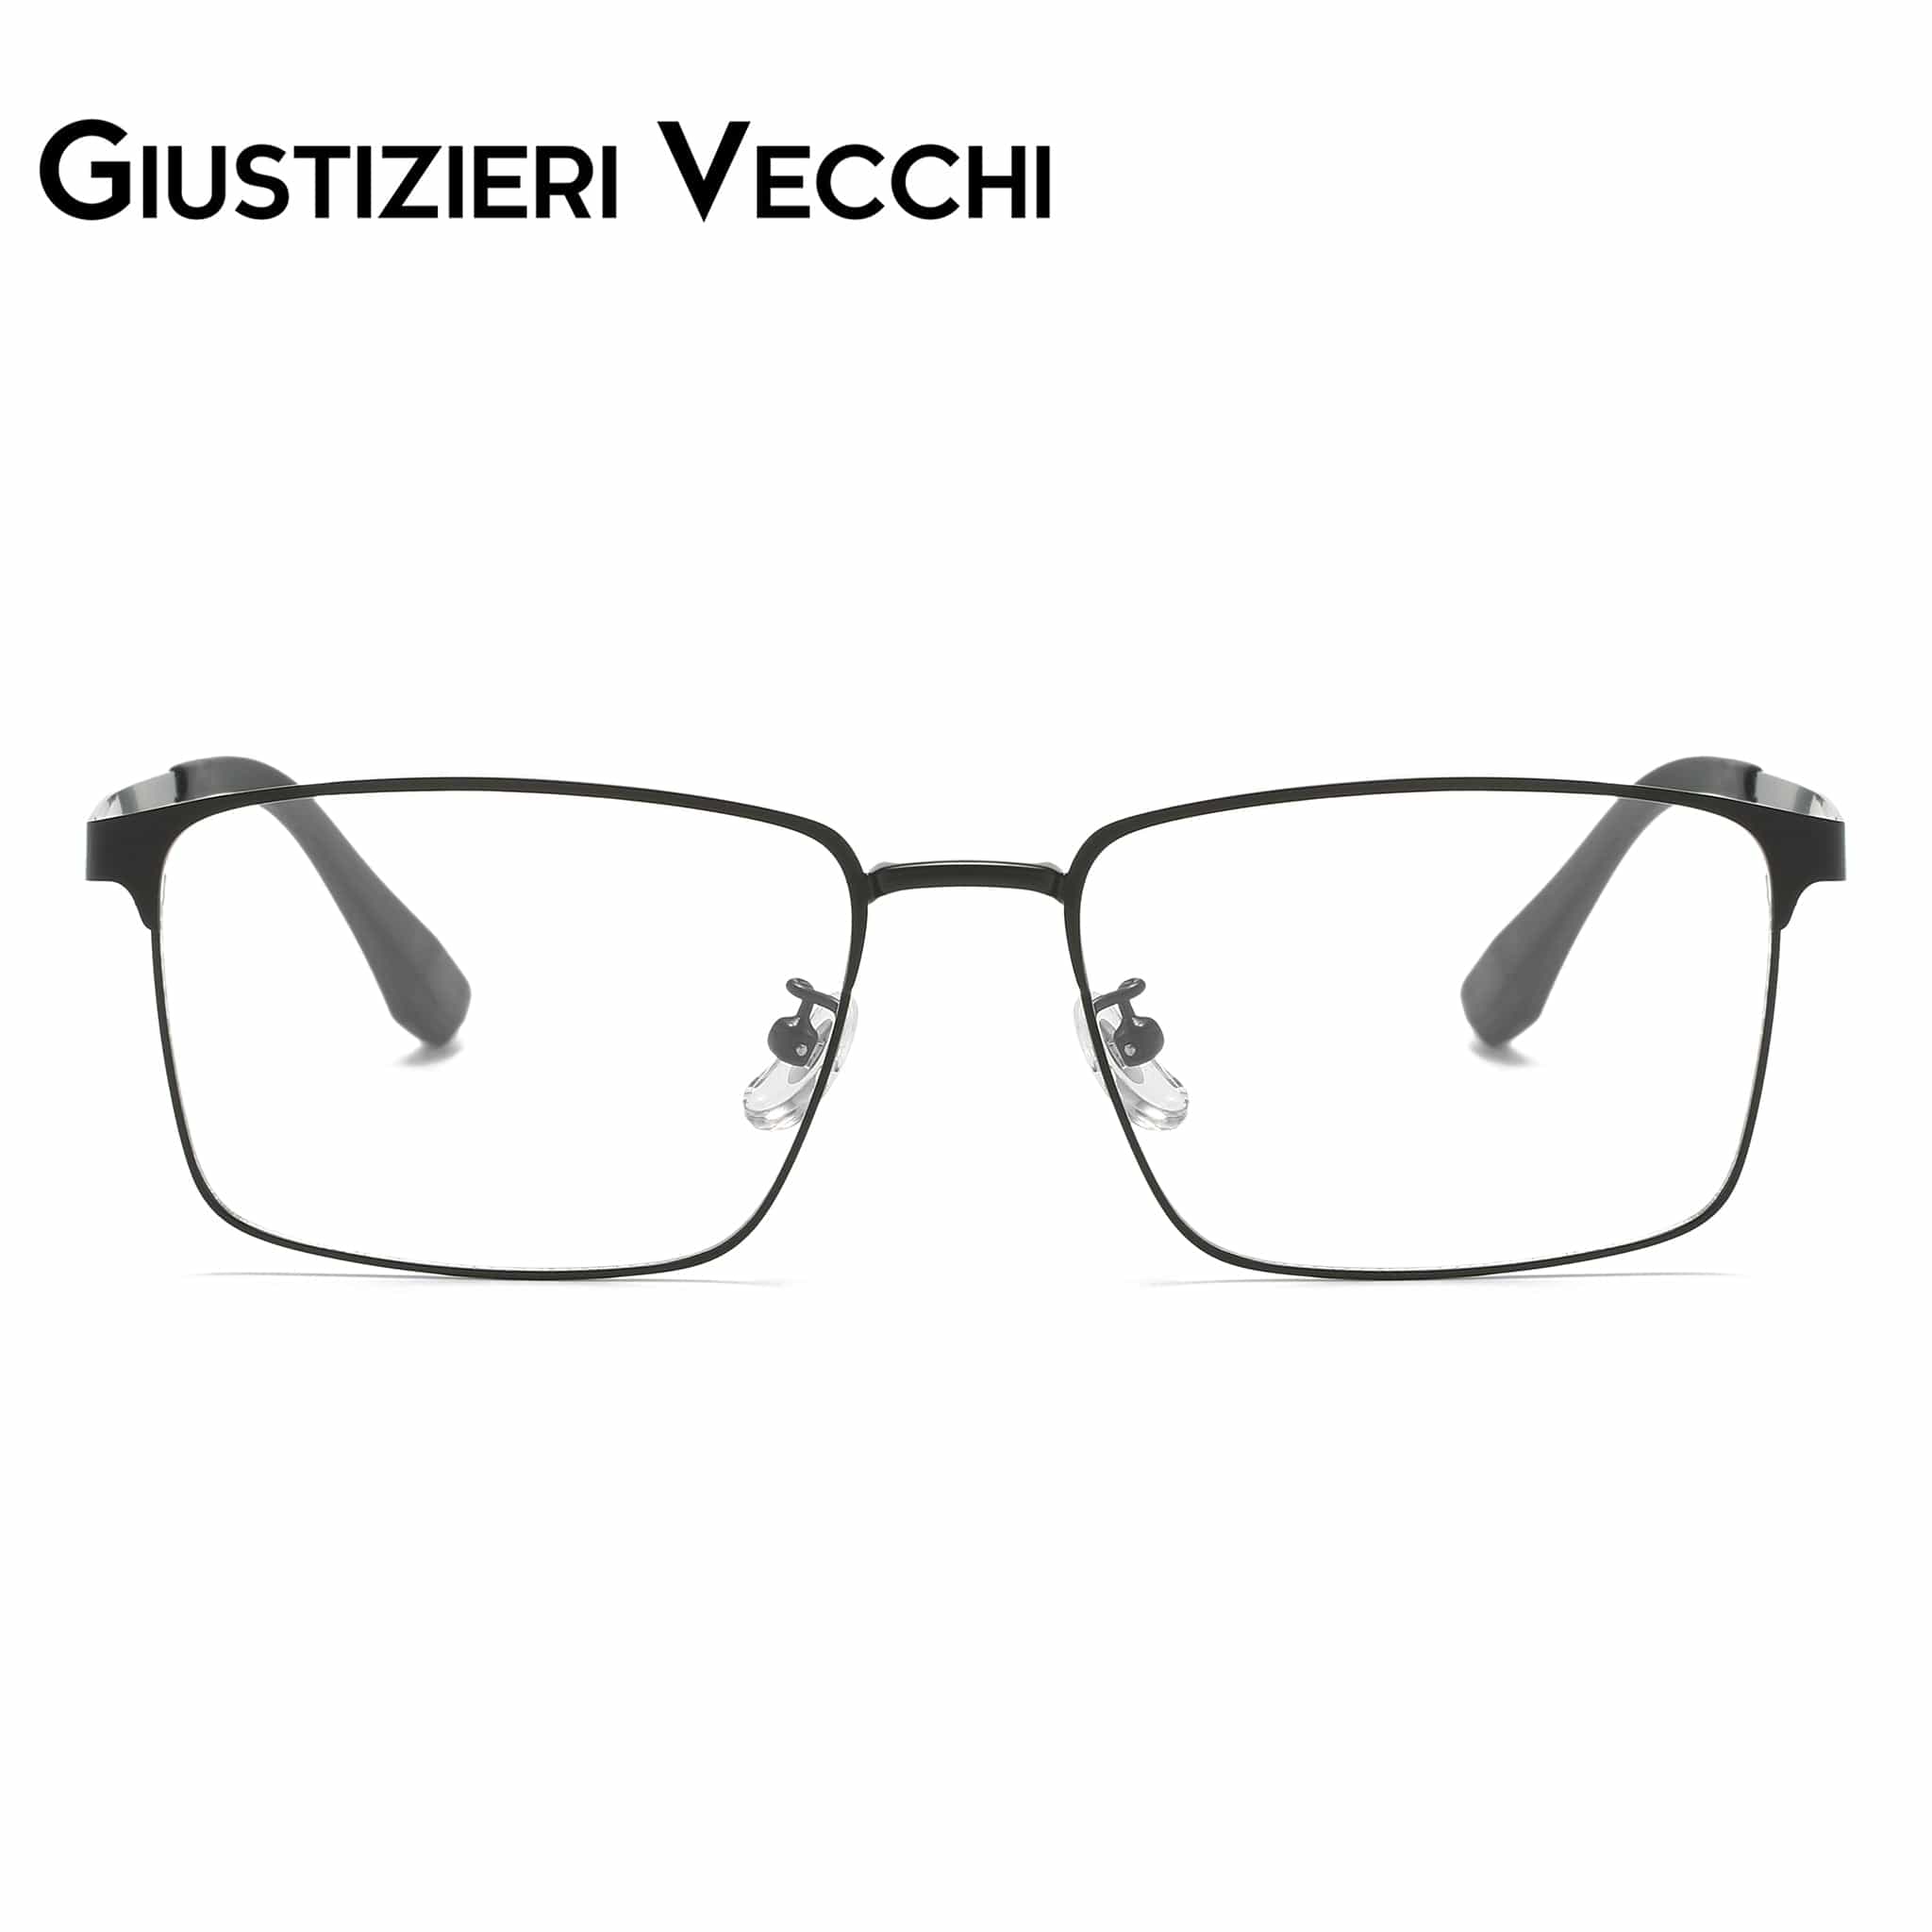 GIUSTIZIERI VECCHI Eyeglasses Large / Brushed Gunmatal SkyRider Uno